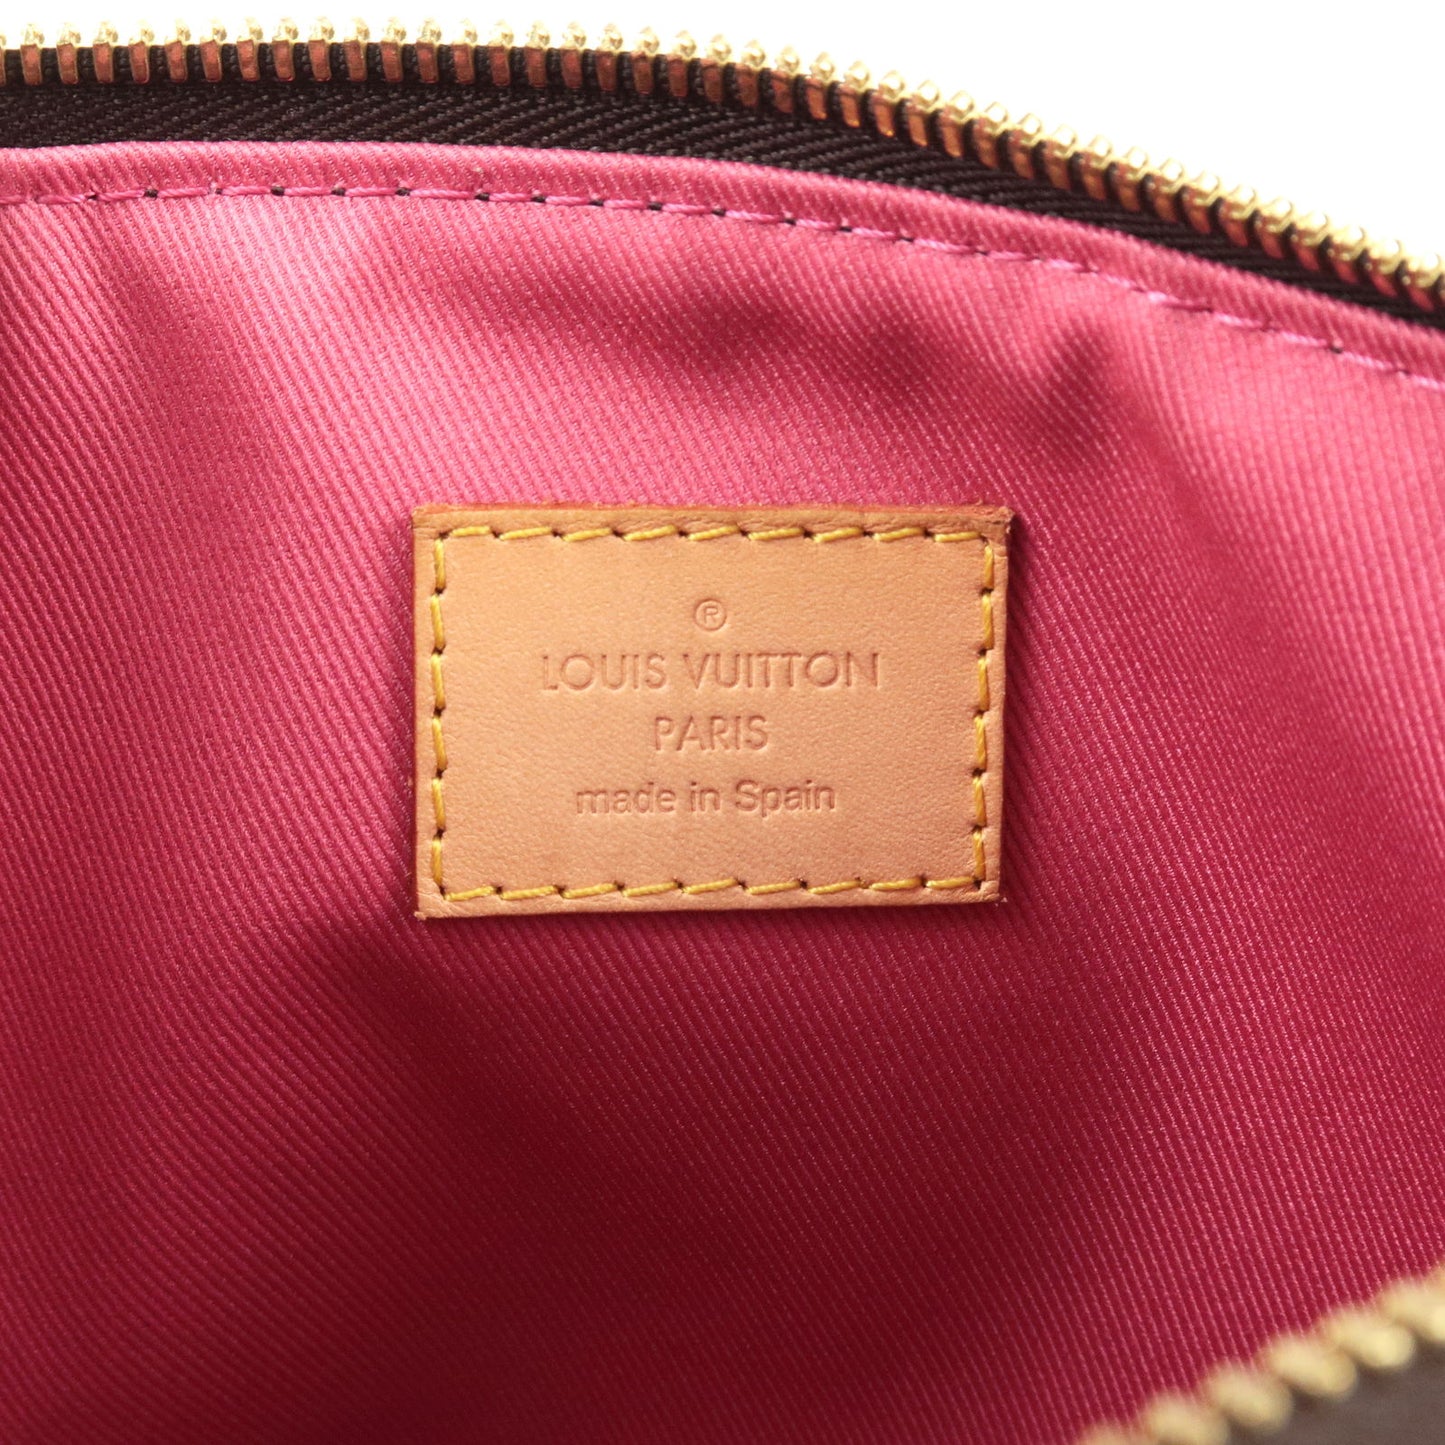 louis vuitton lorette (cross body bag .. lovin the pink and mustard strap)